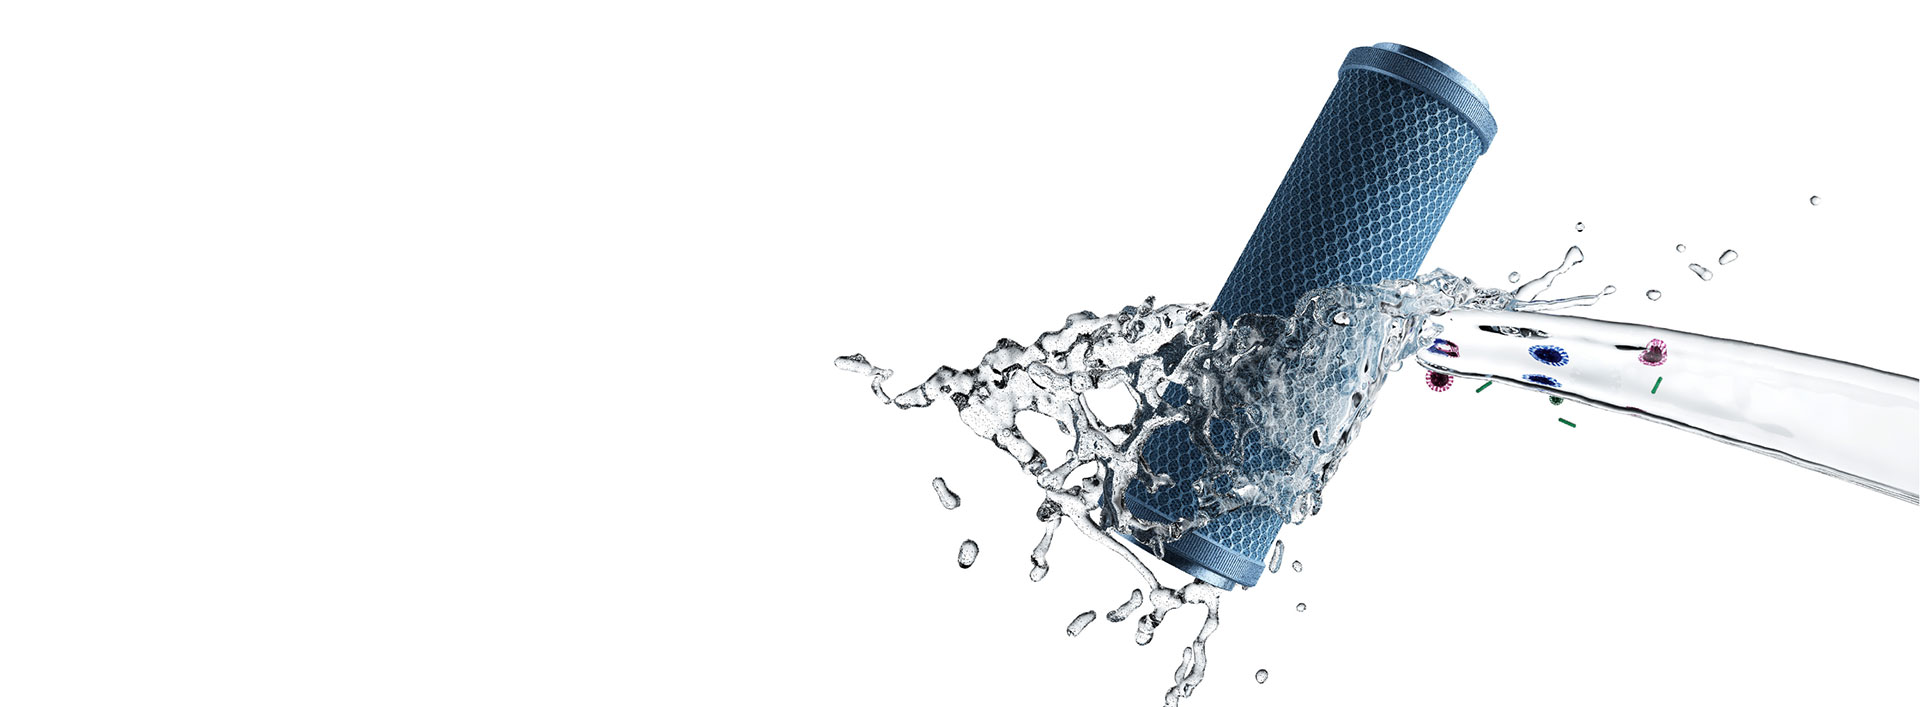 Buy Aquaguard Ritz RO+UV+MTDS+SS Water Purifier Online